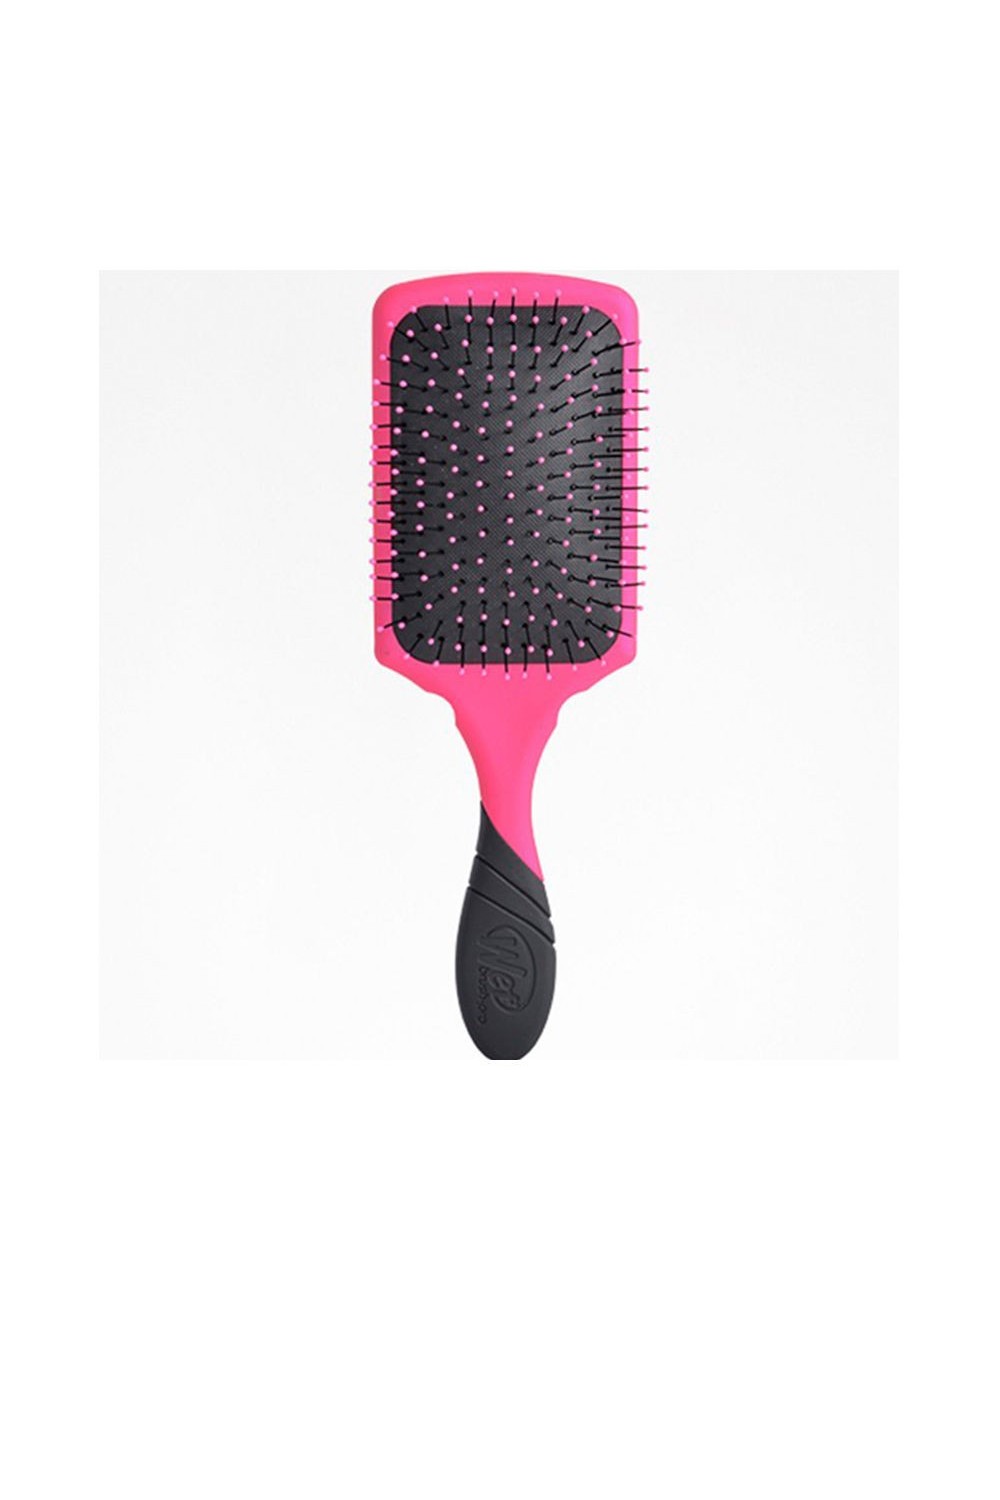 The Wet Brush Pro Paddle Detangler Pink 1 U